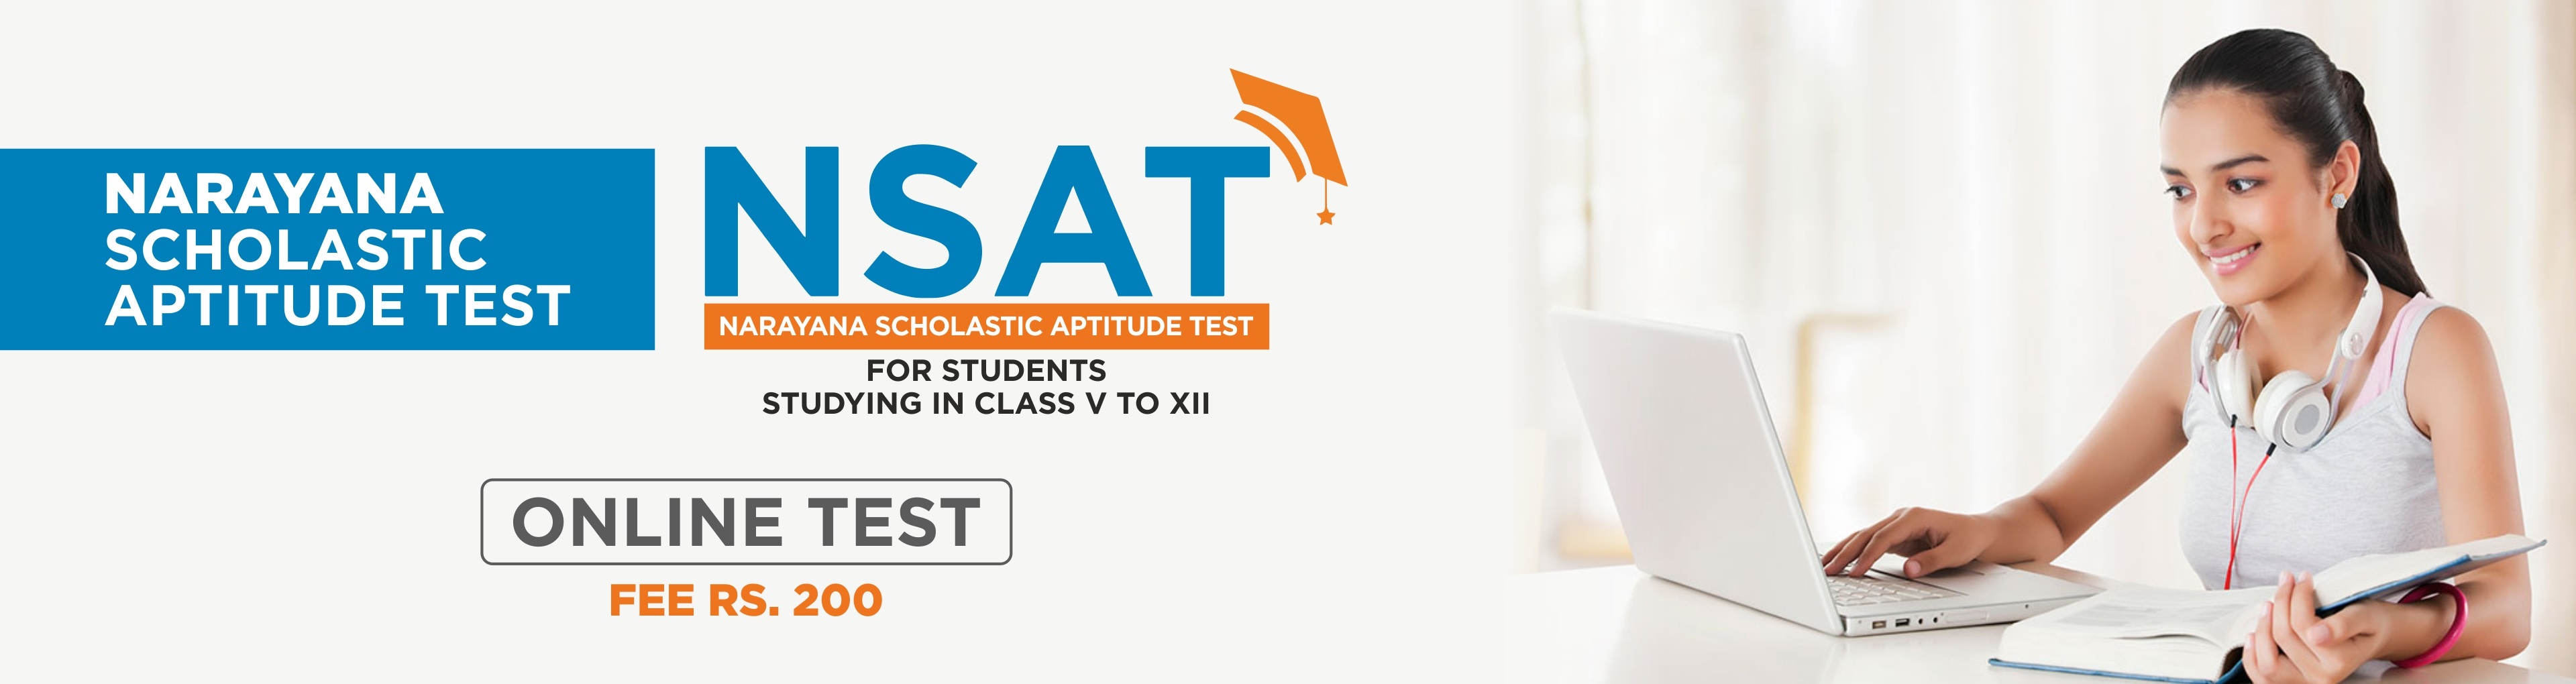 nsat-2020-narayana-s-scholastic-aptitude-test-nsat-narayanagroup-www-scholarships-in